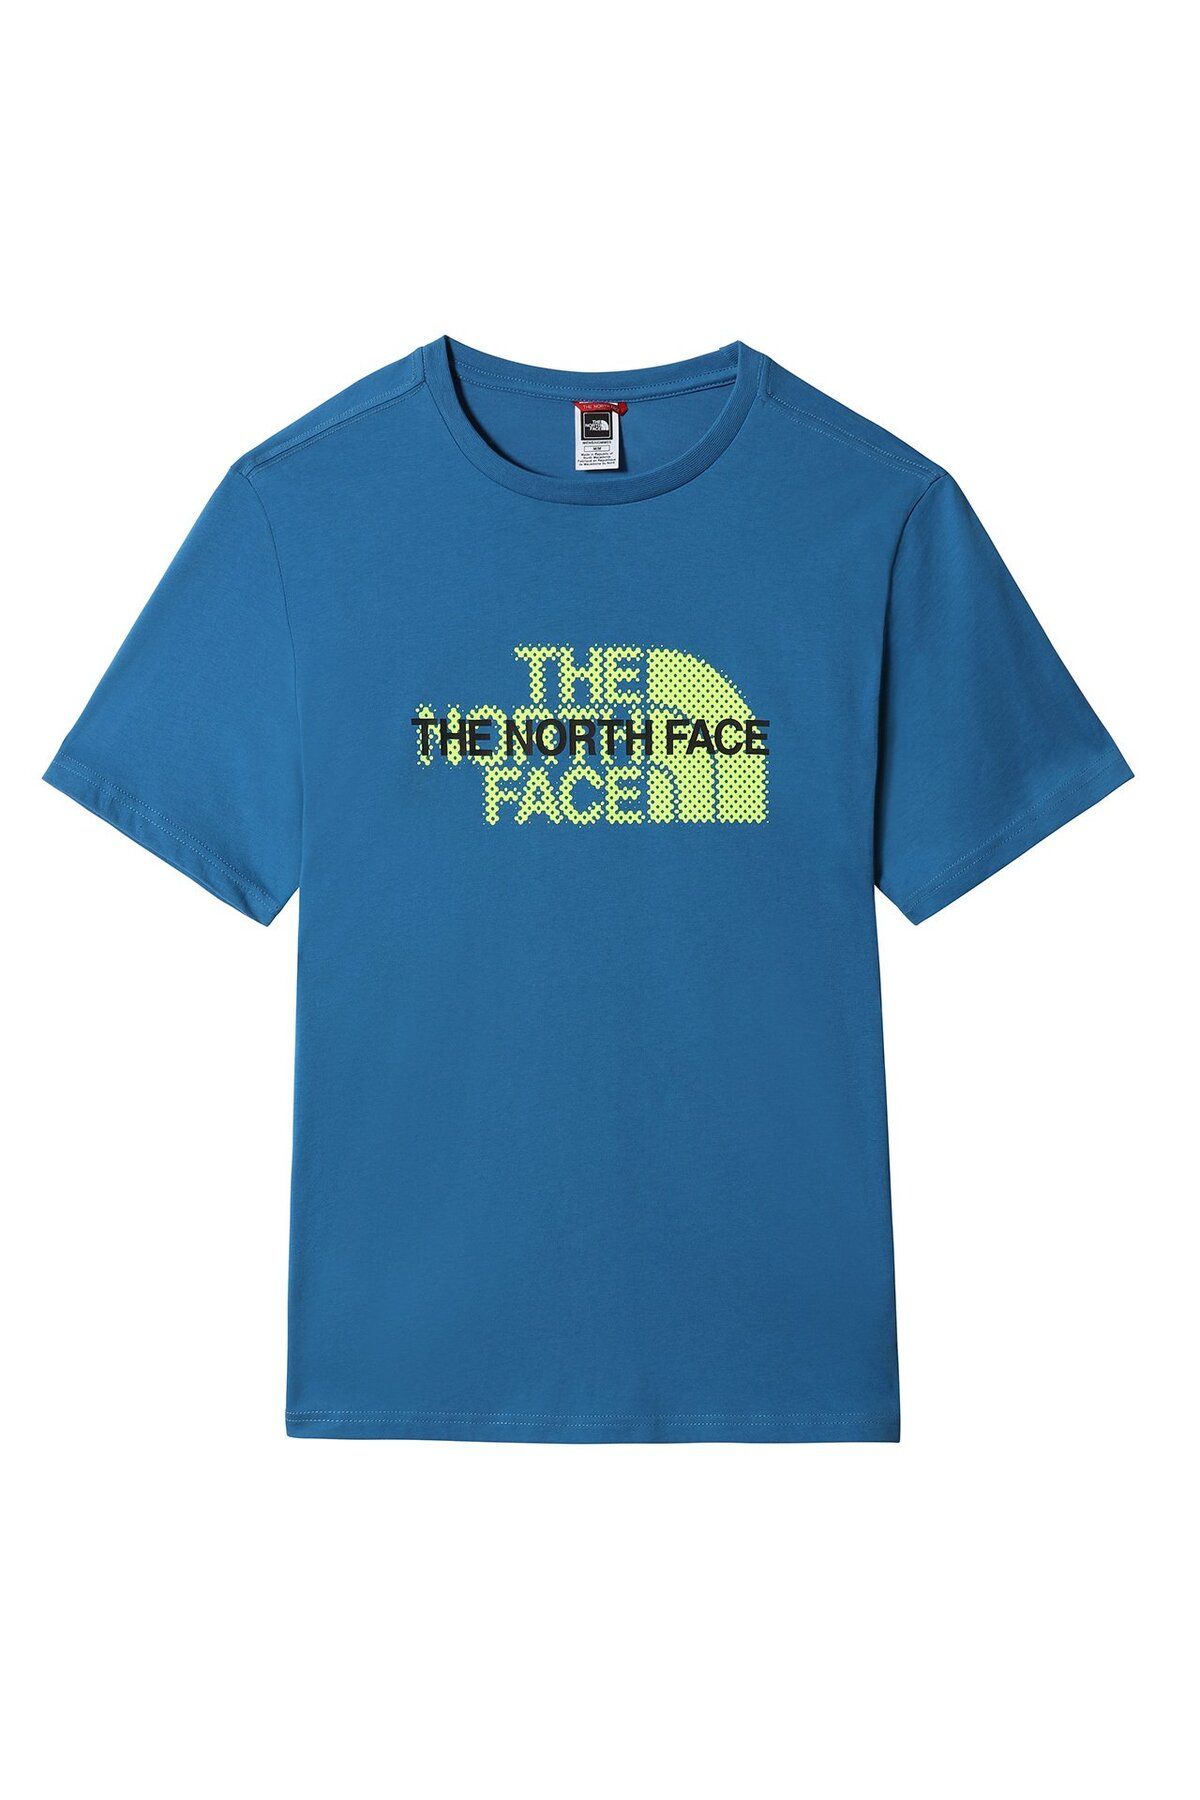 The North Face تی شرت سه راهی گرافیکی مردانه آبی